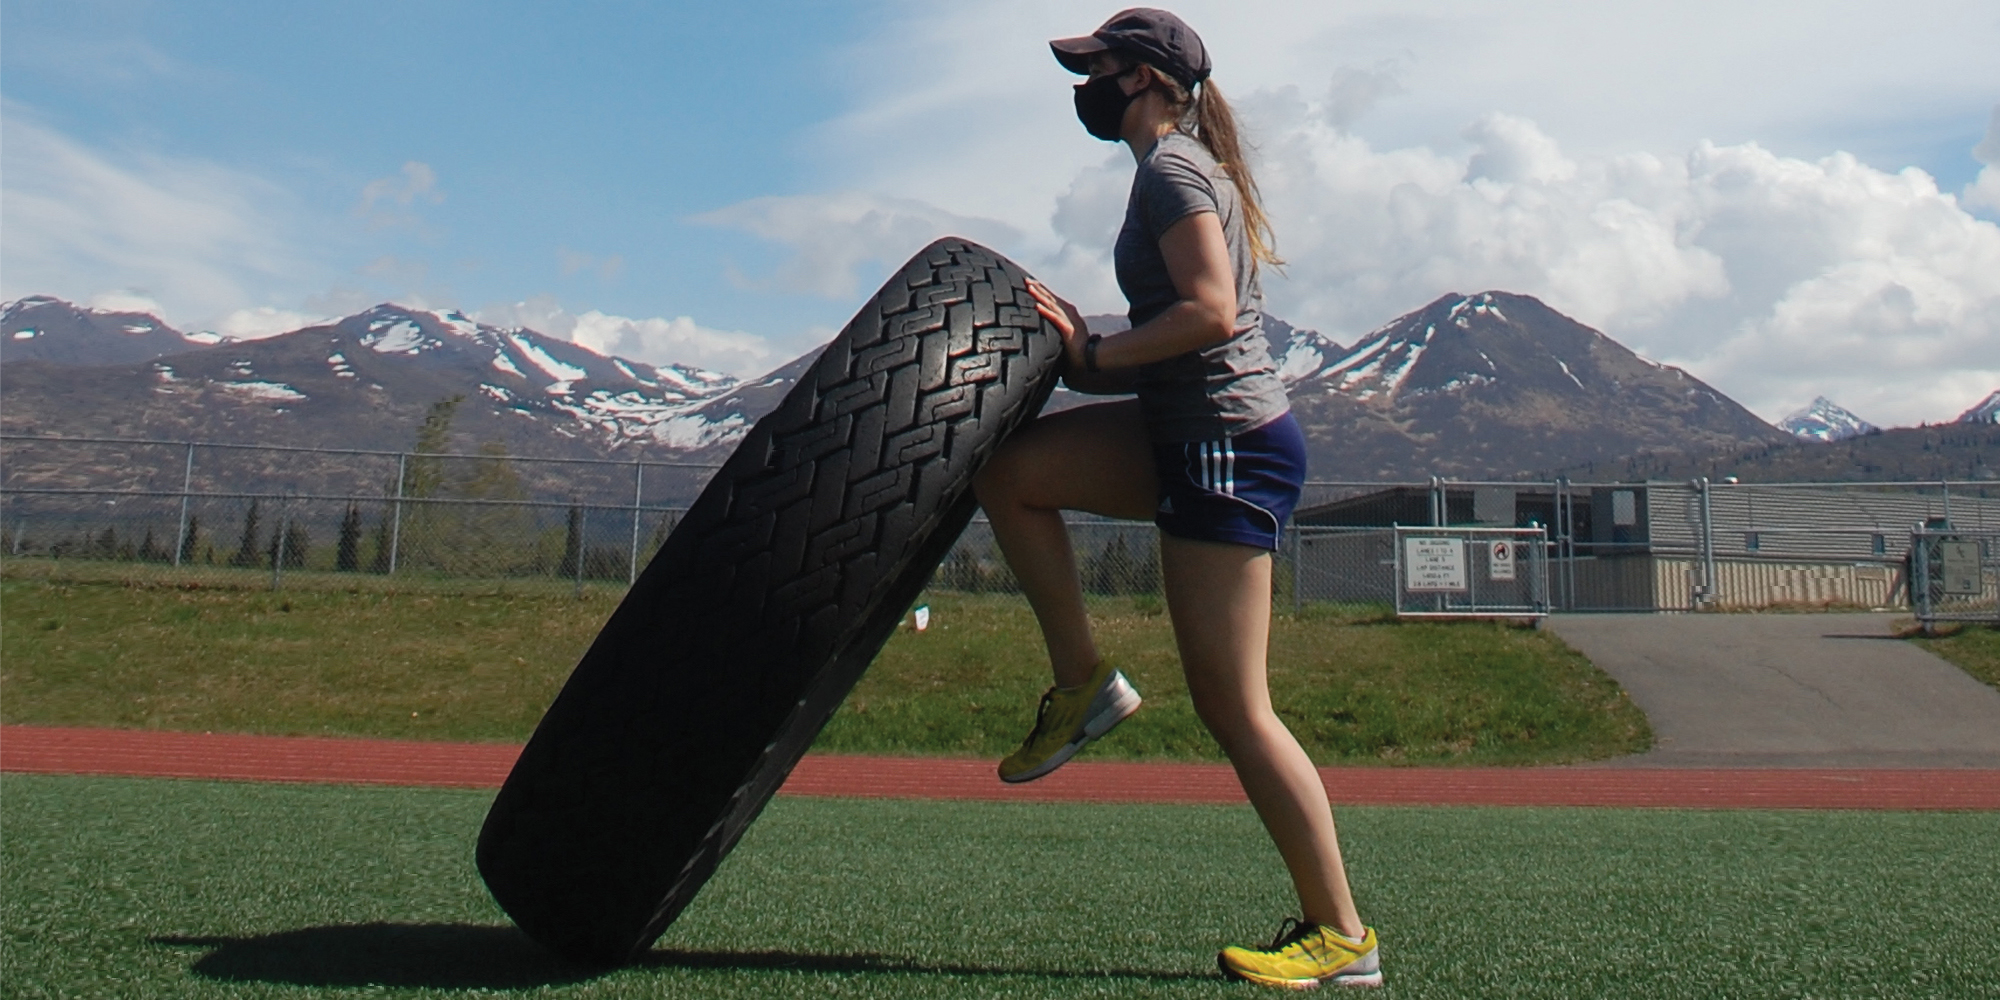 Vera Soloview doing tire training in Alaska